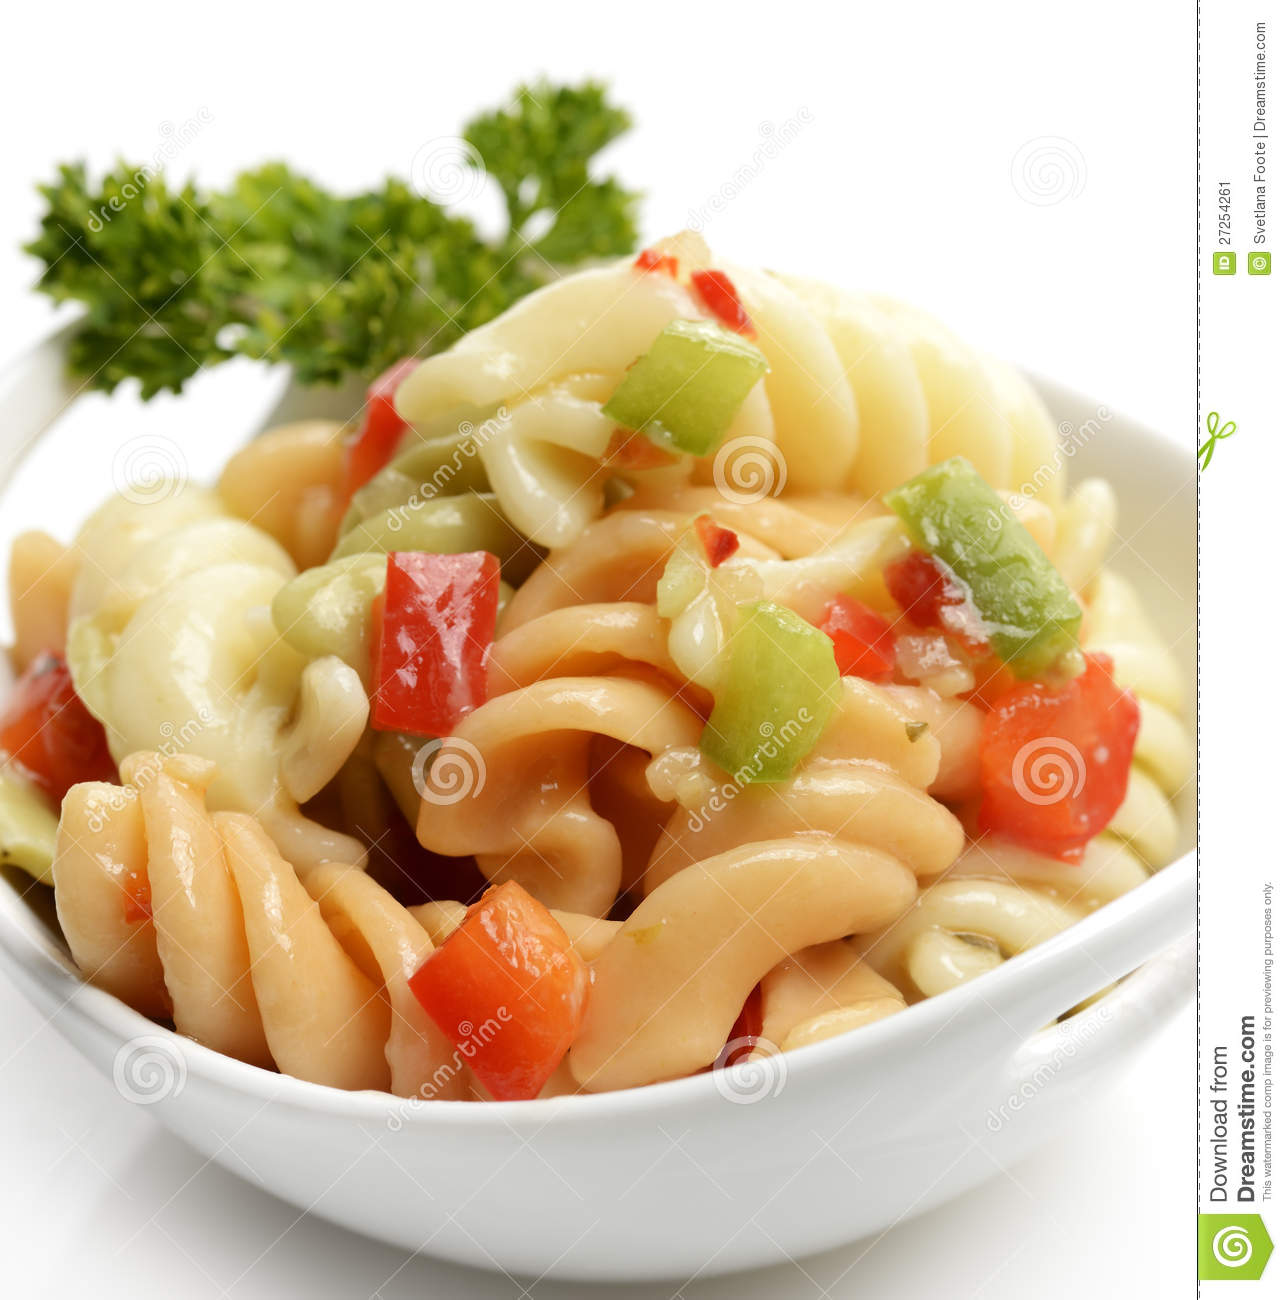 Macaroni Salad Stock Image   Image  27254261